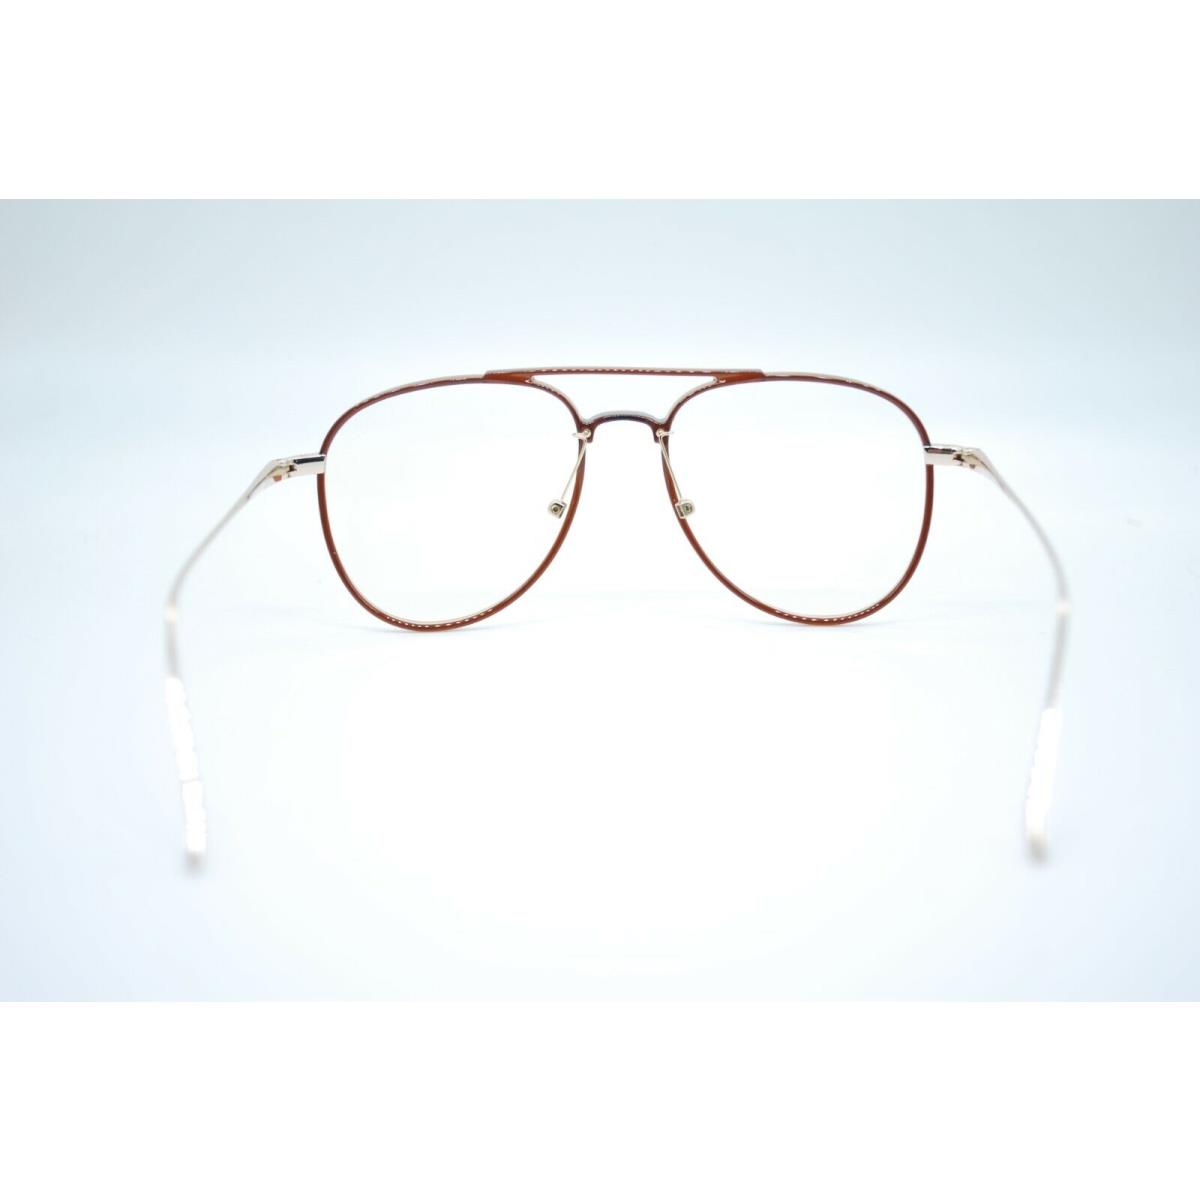 Tom Ford eyeglasses  - BROWN ROSE GOLD Frame 3